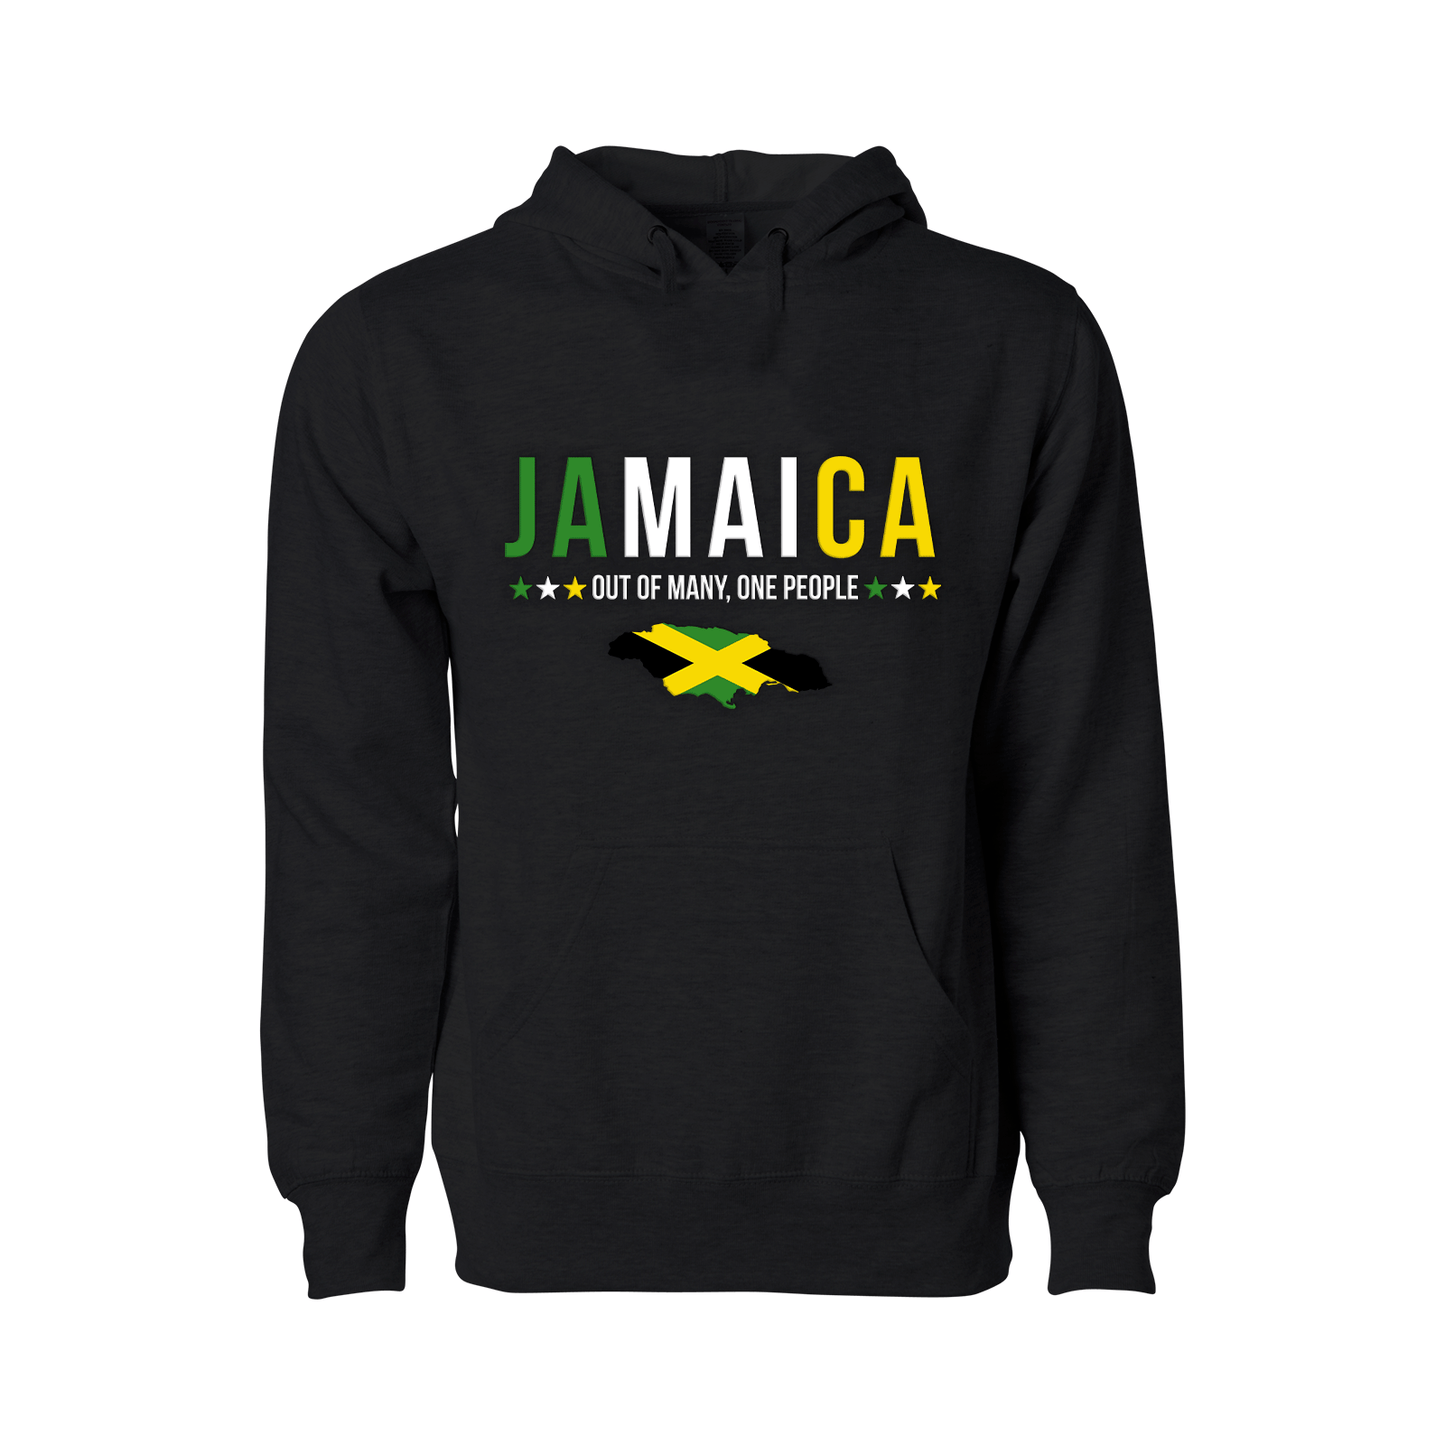 Jamaica Hoodie - Adult